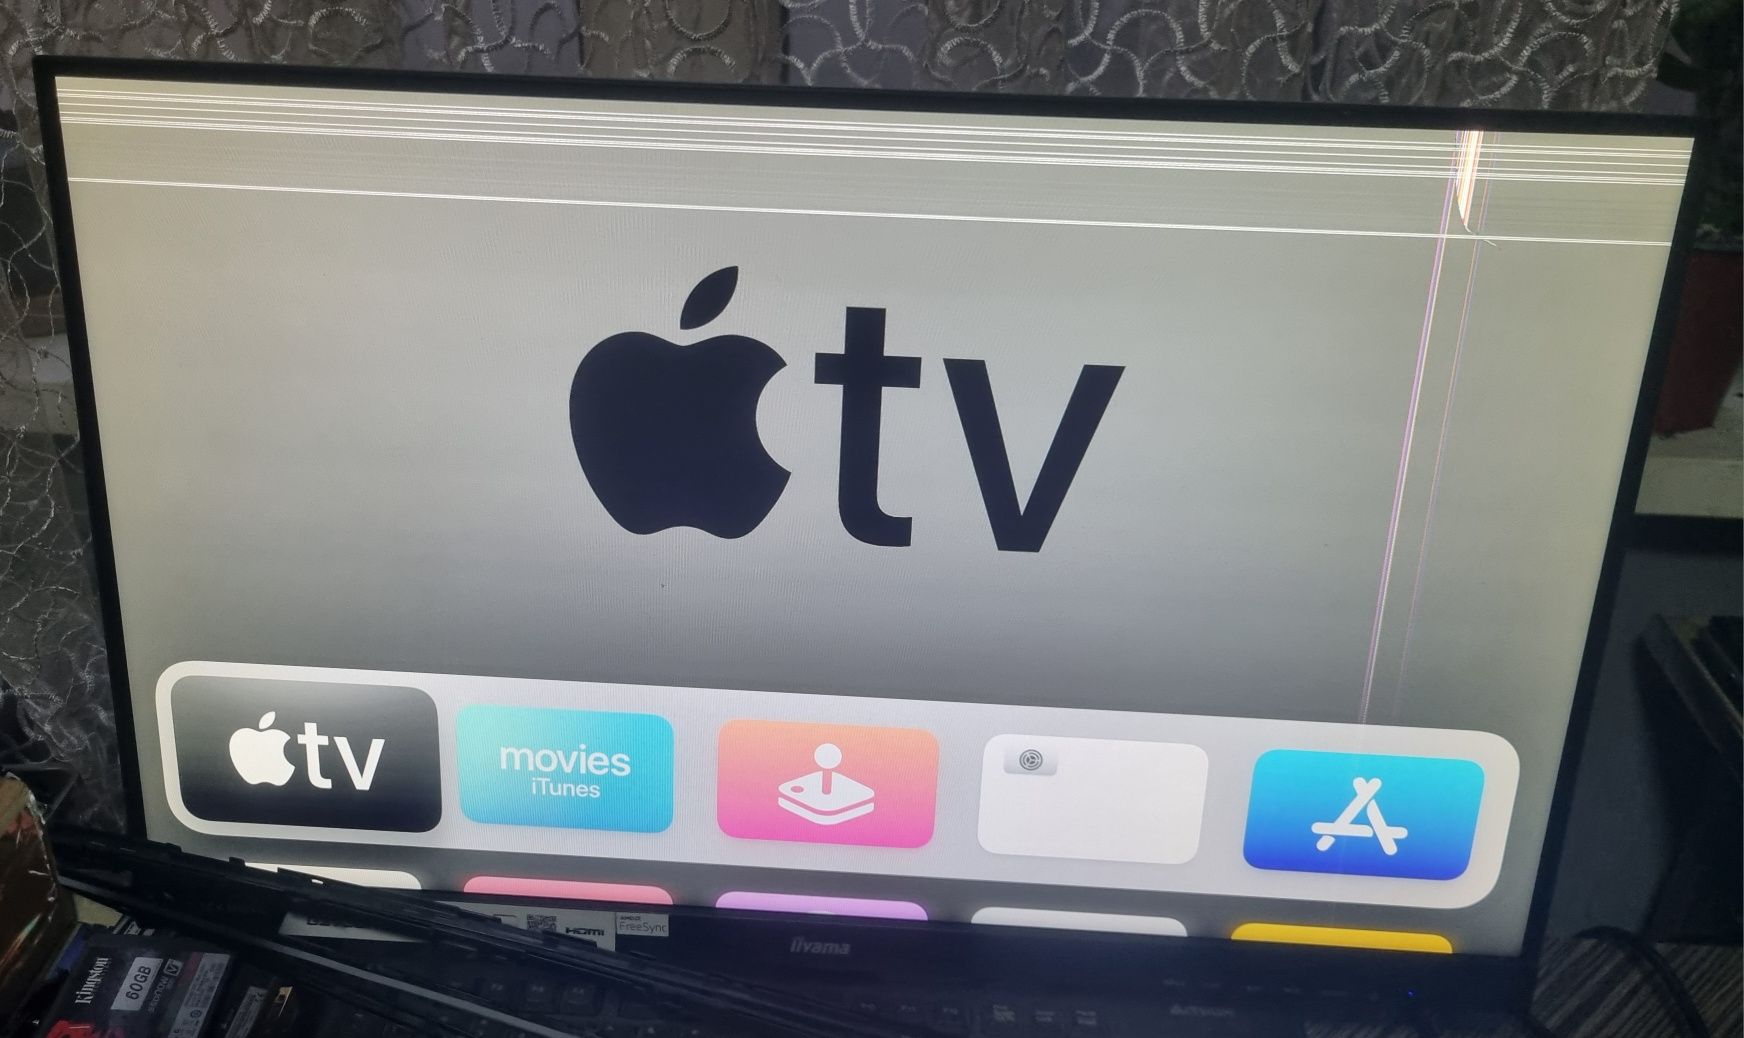 vand Apple TV Generatia 4 32 GB  Media Streamer.
Apple TV gene